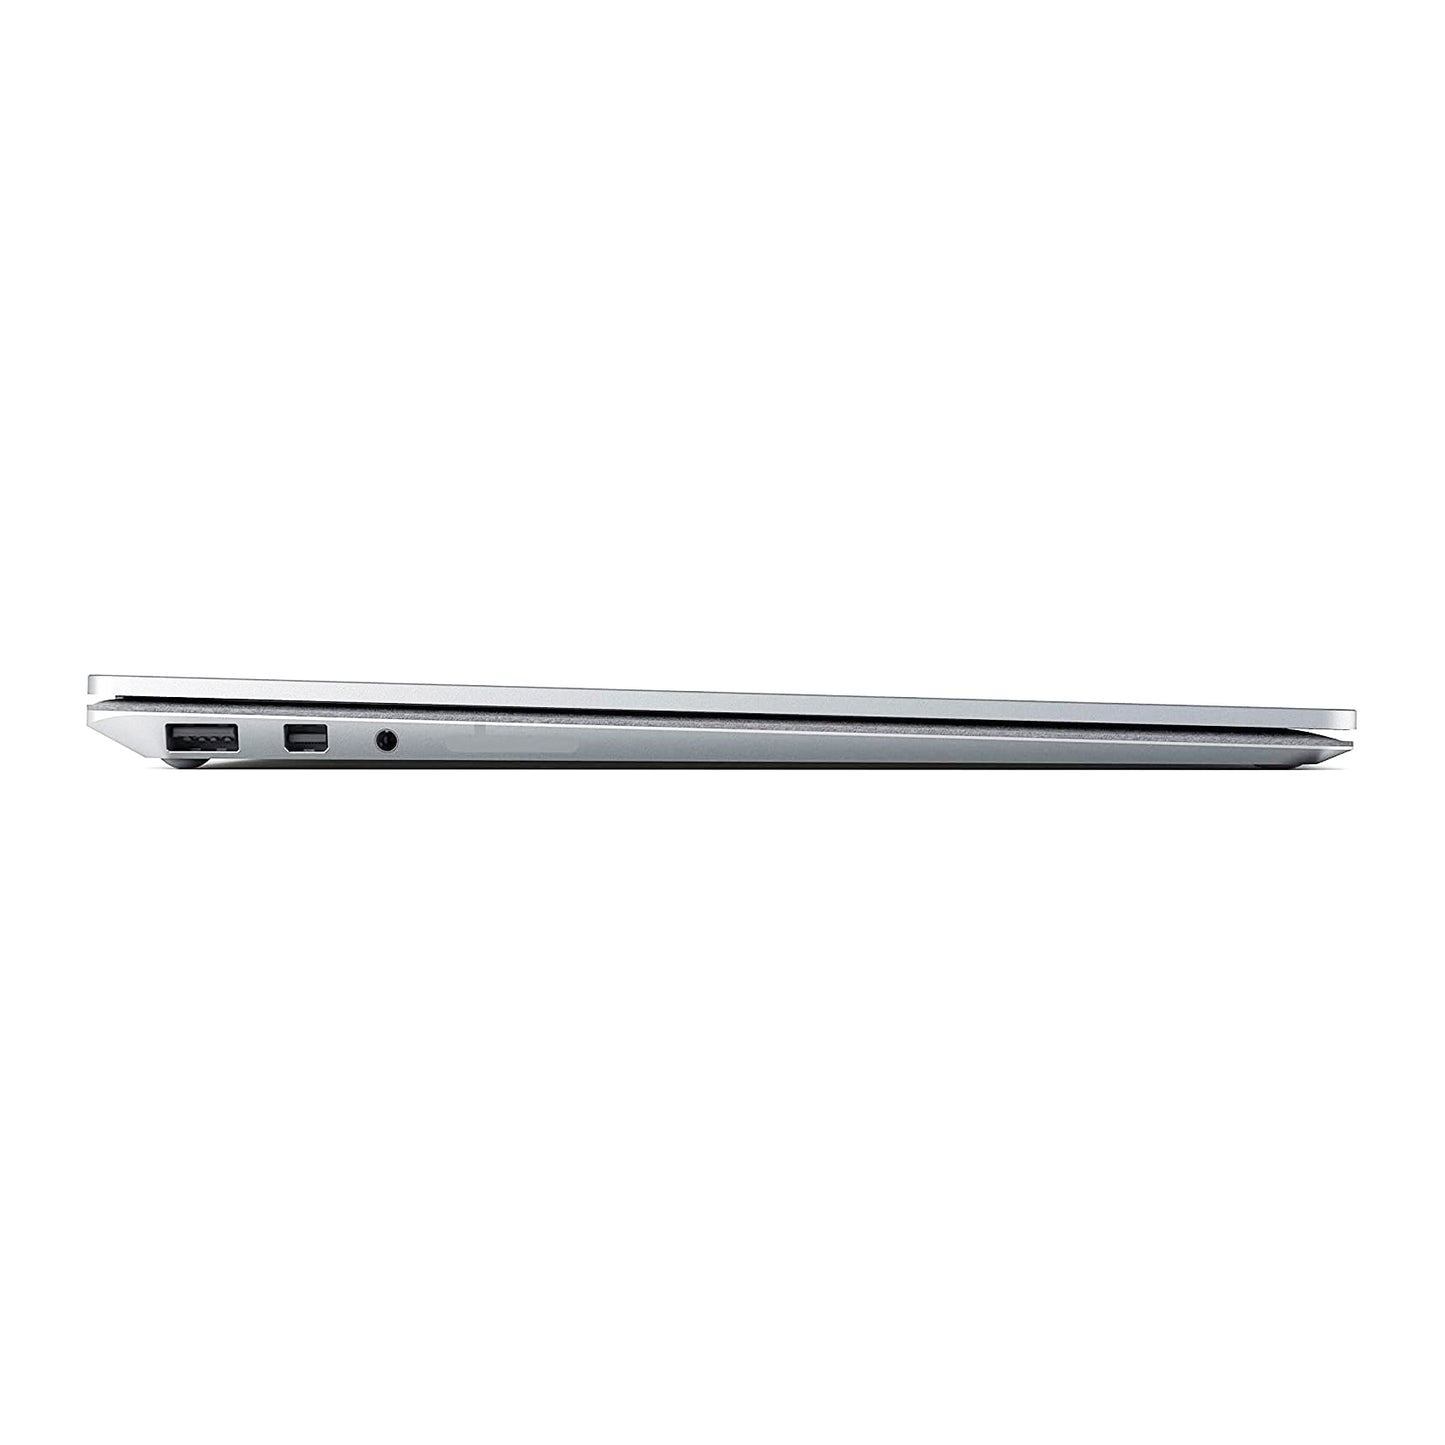 Microsoft Surface 2 Core i5-8350u 2K Pixel Sense Touch Laptop Offer (New OB)